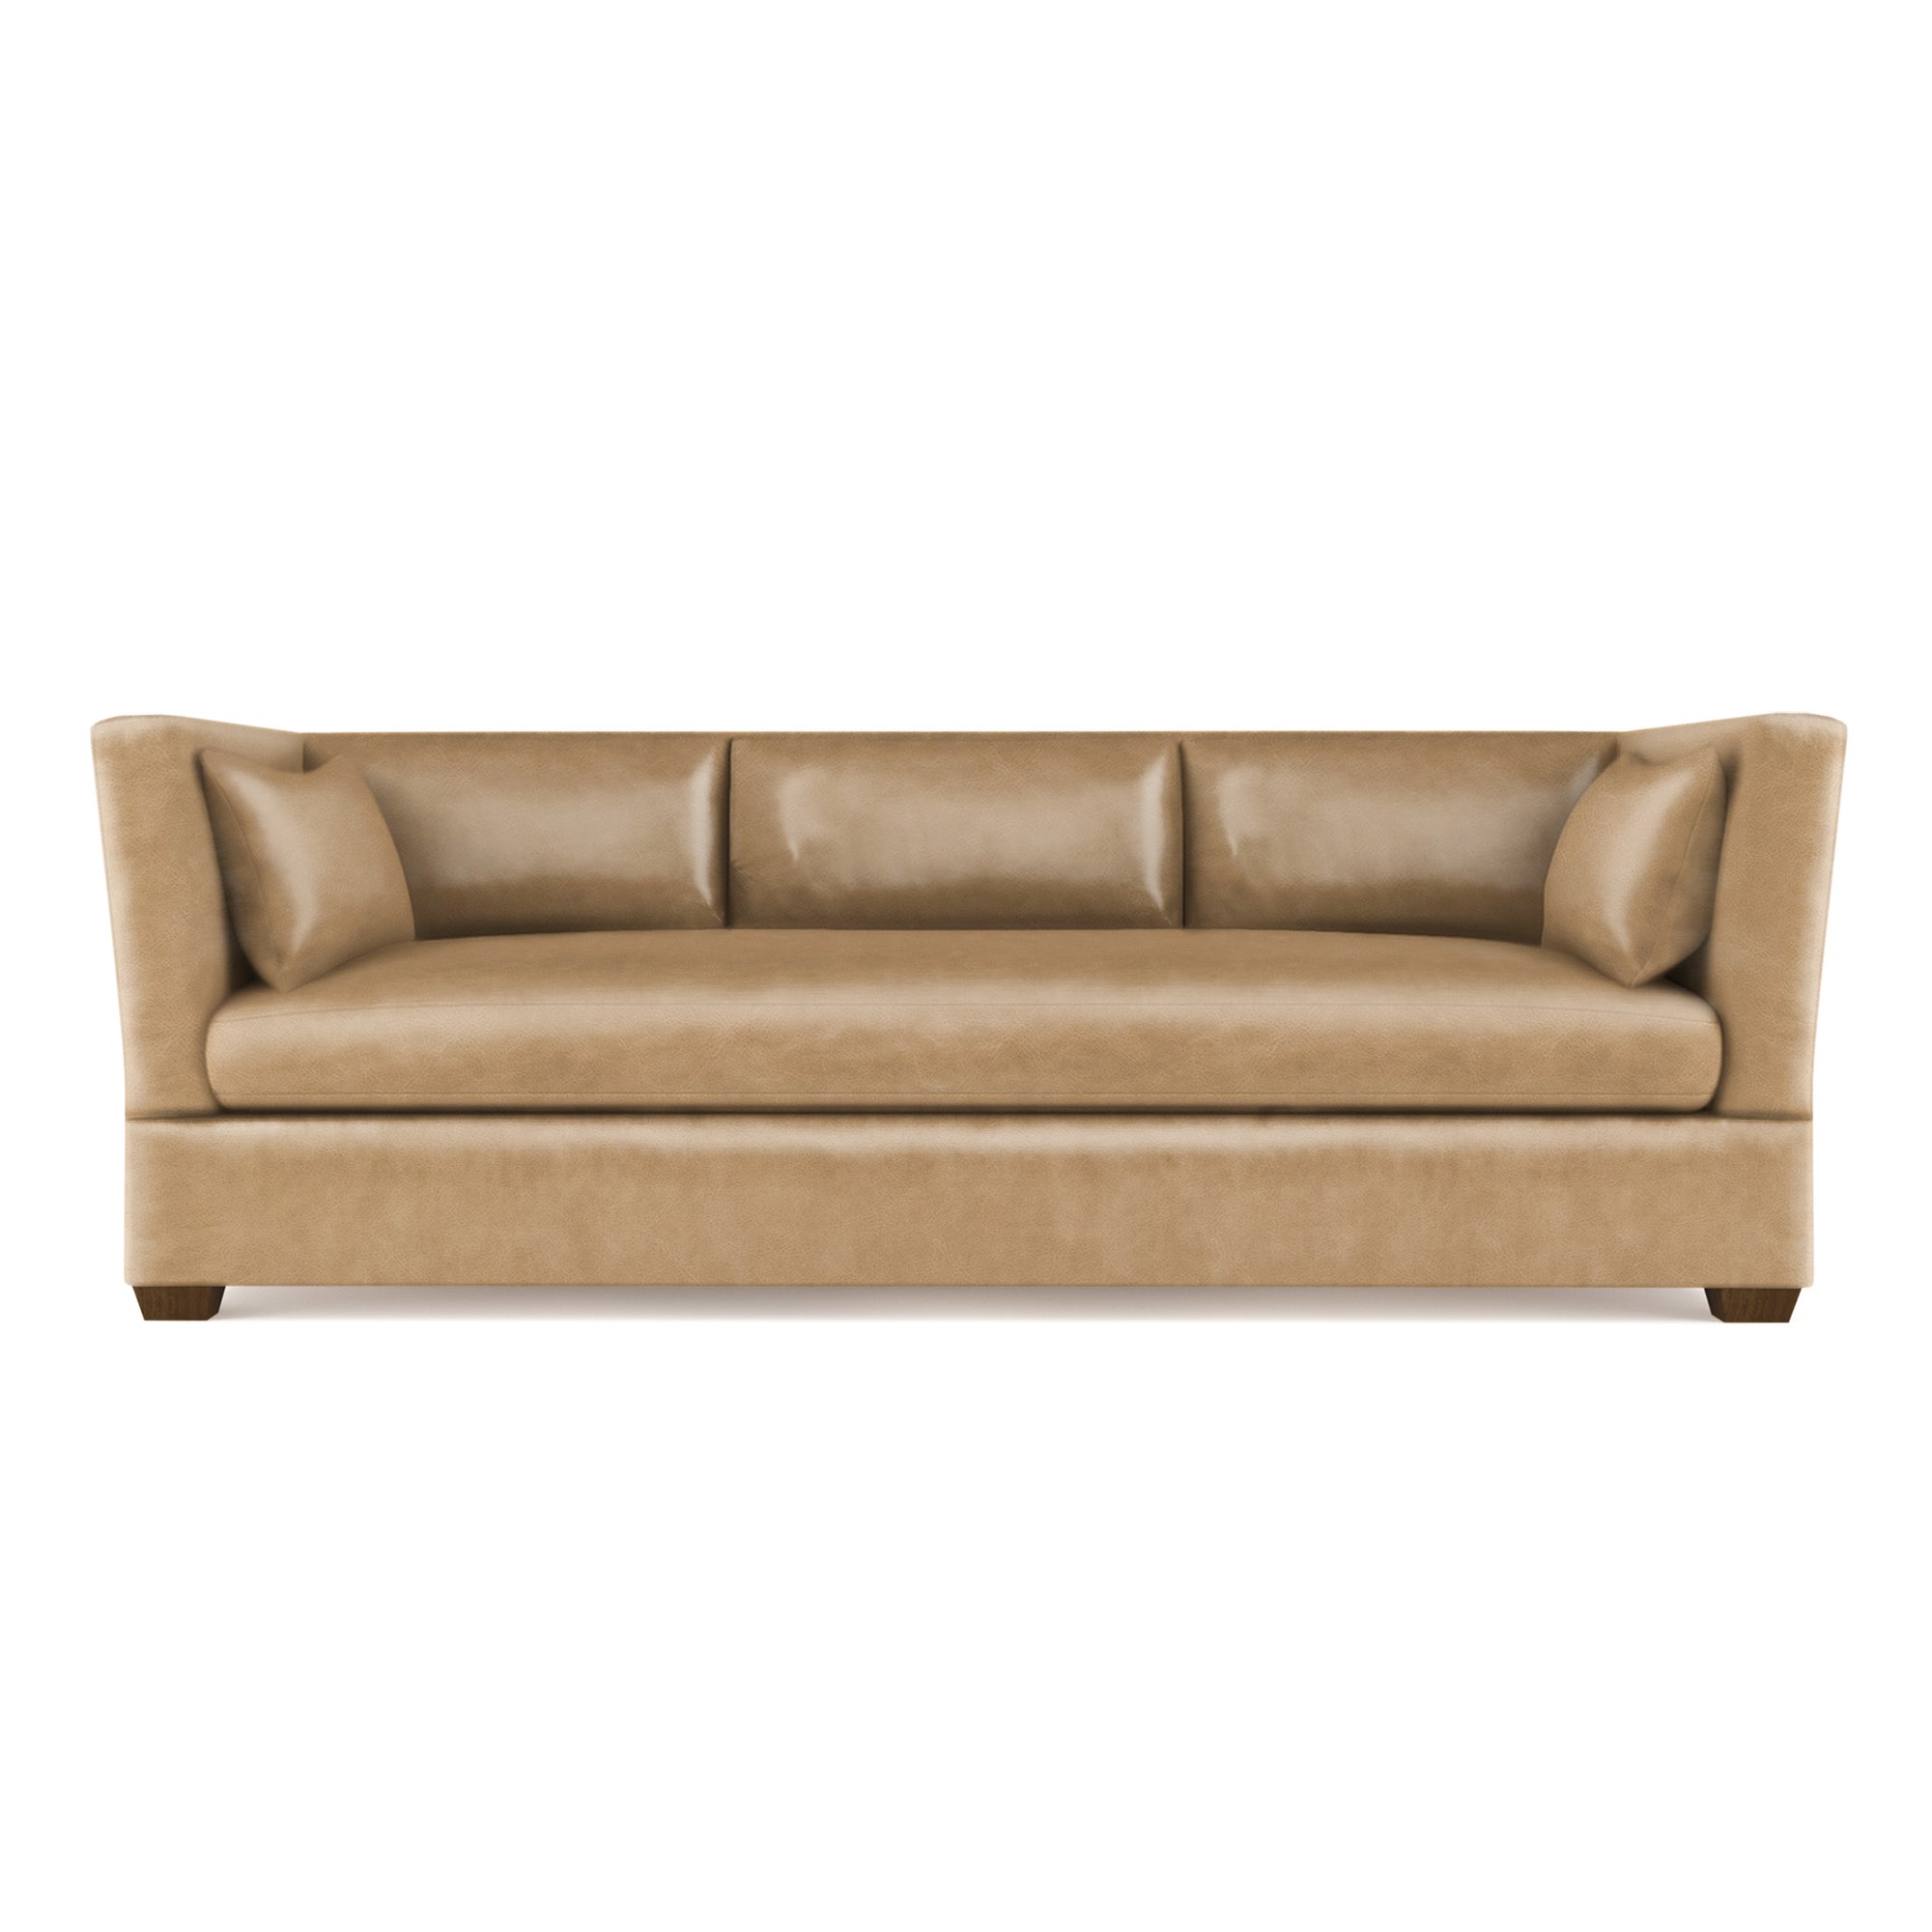 Rivington Sofa - Marzipan Vintage Leather